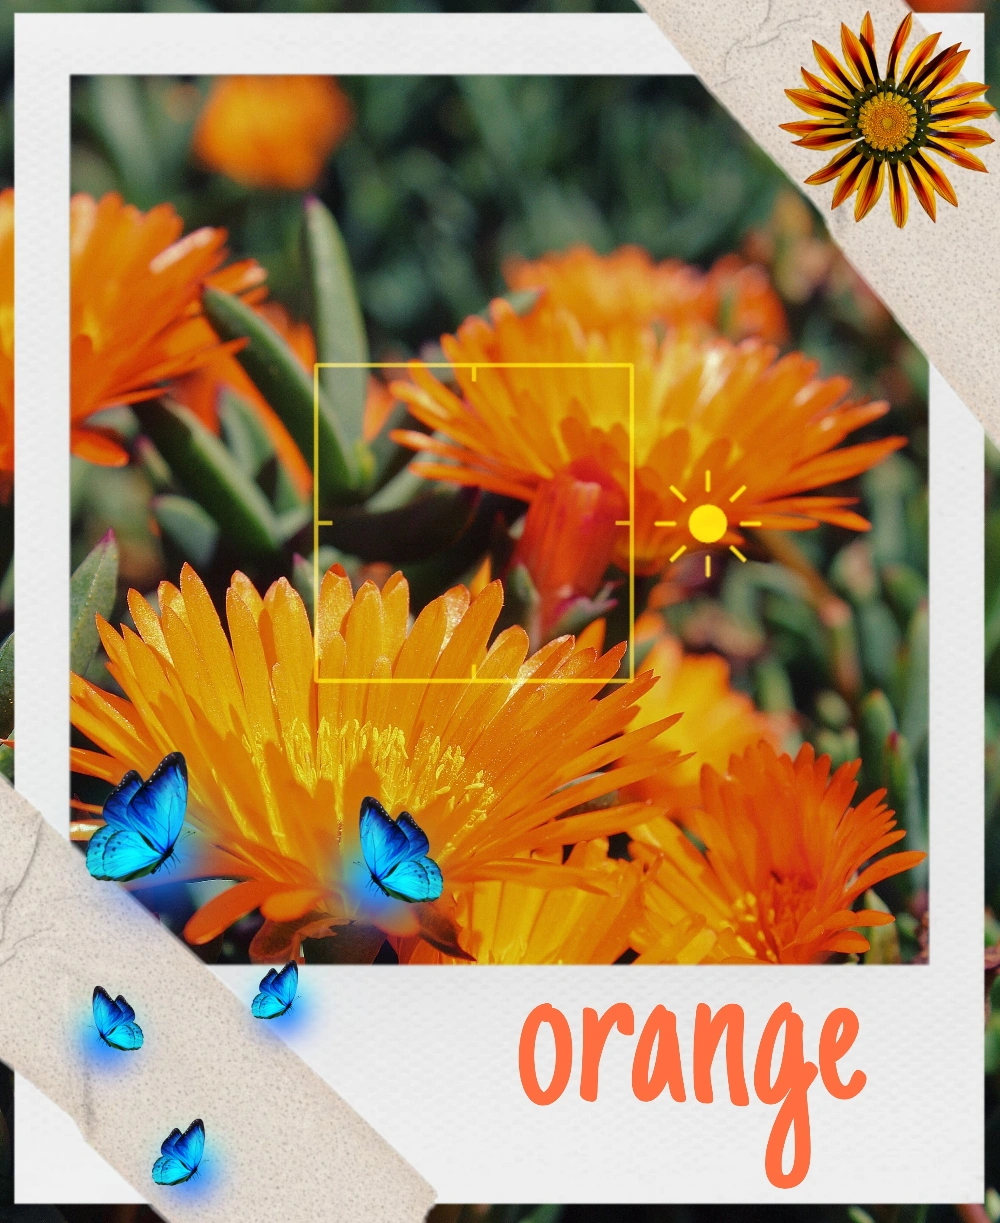 mirsulton #orange #orangeaesthetic #flower